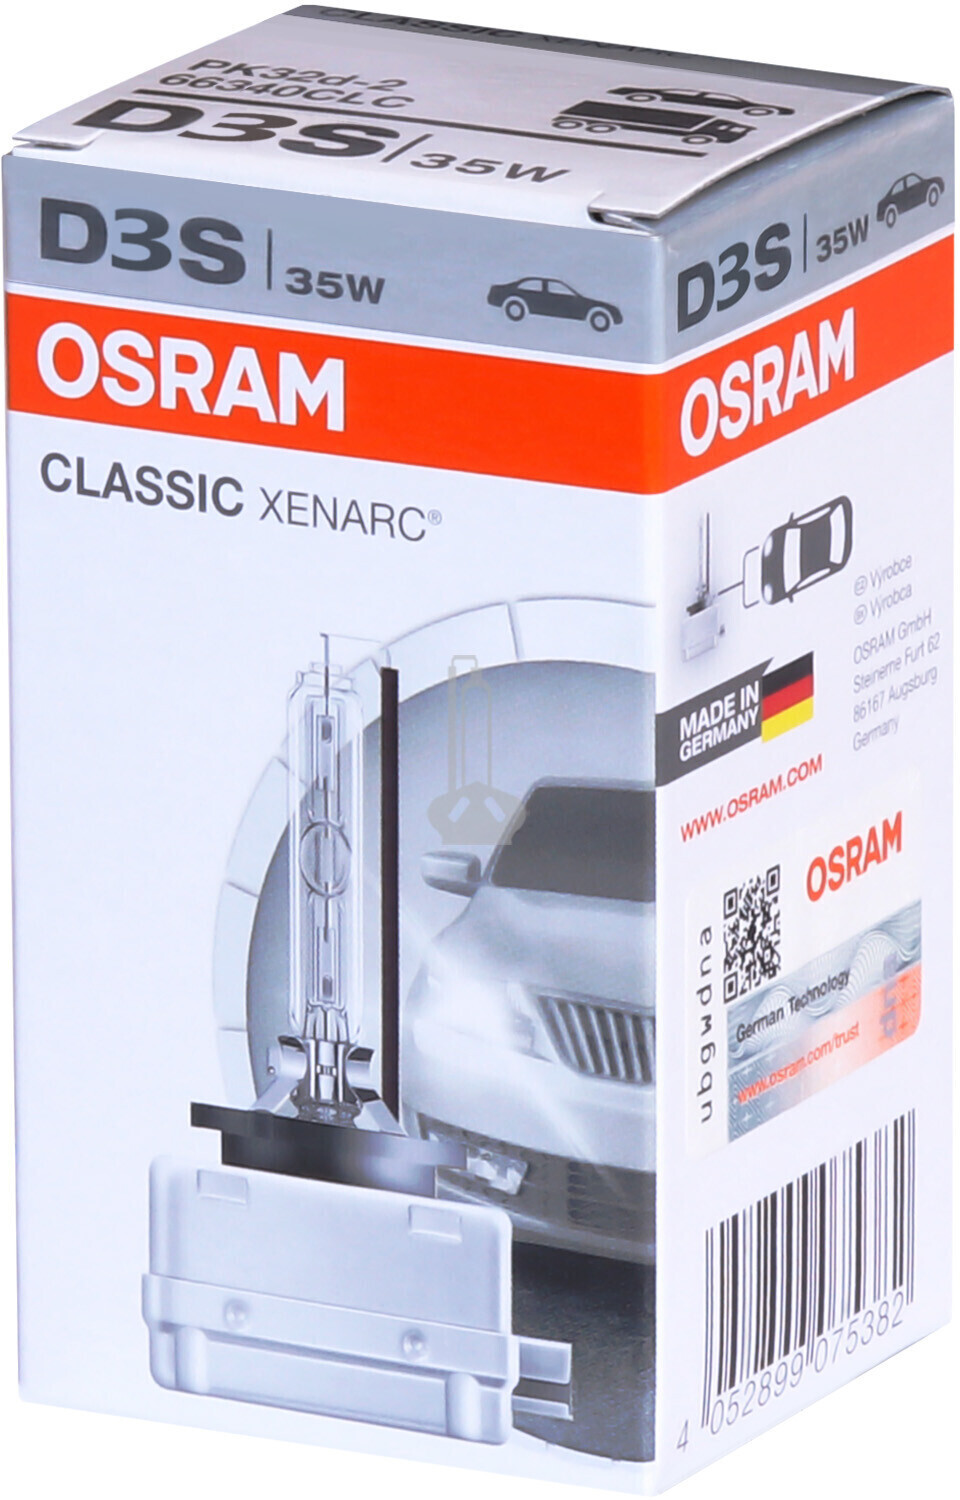 Osram XENARC Classic 35W D3S (66340CLC) ab 35,39